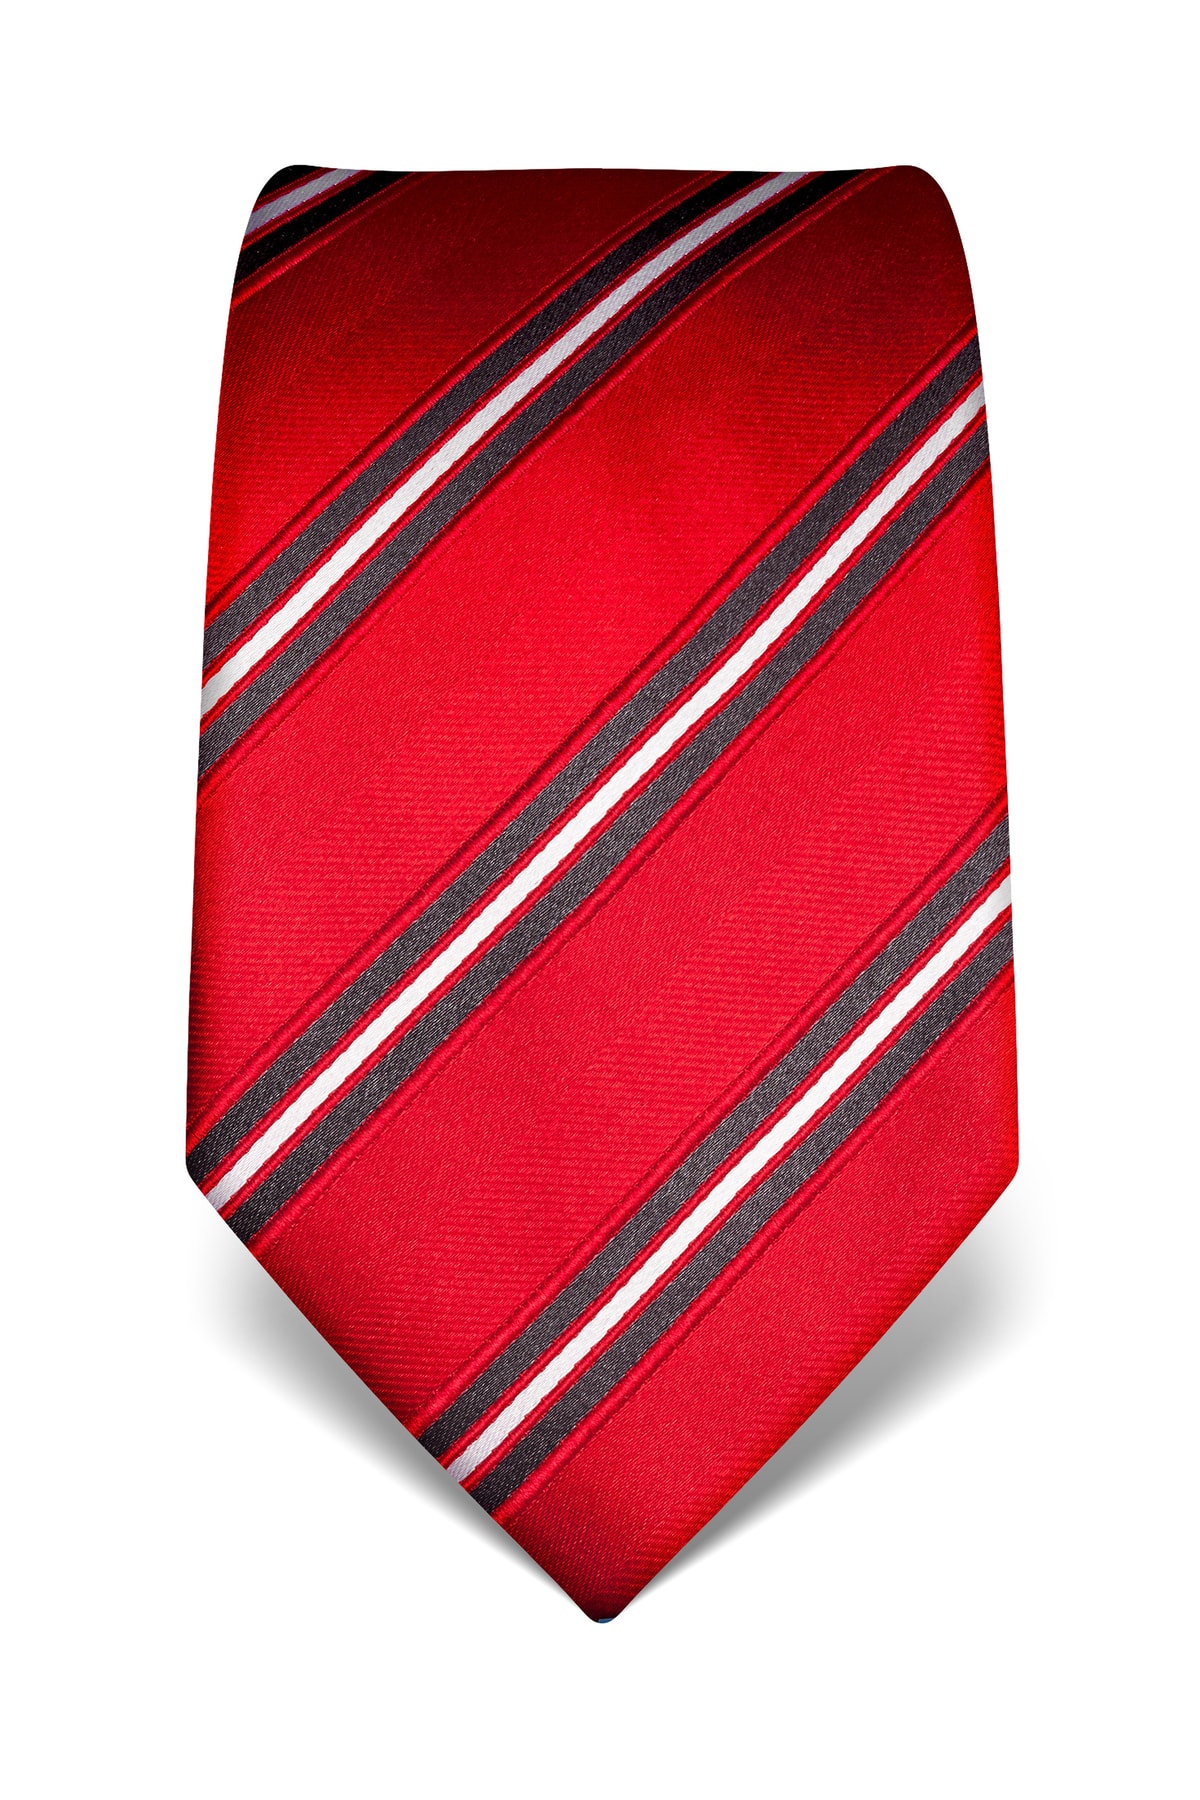 Vincenzo Boretti Krawatte Rot Business